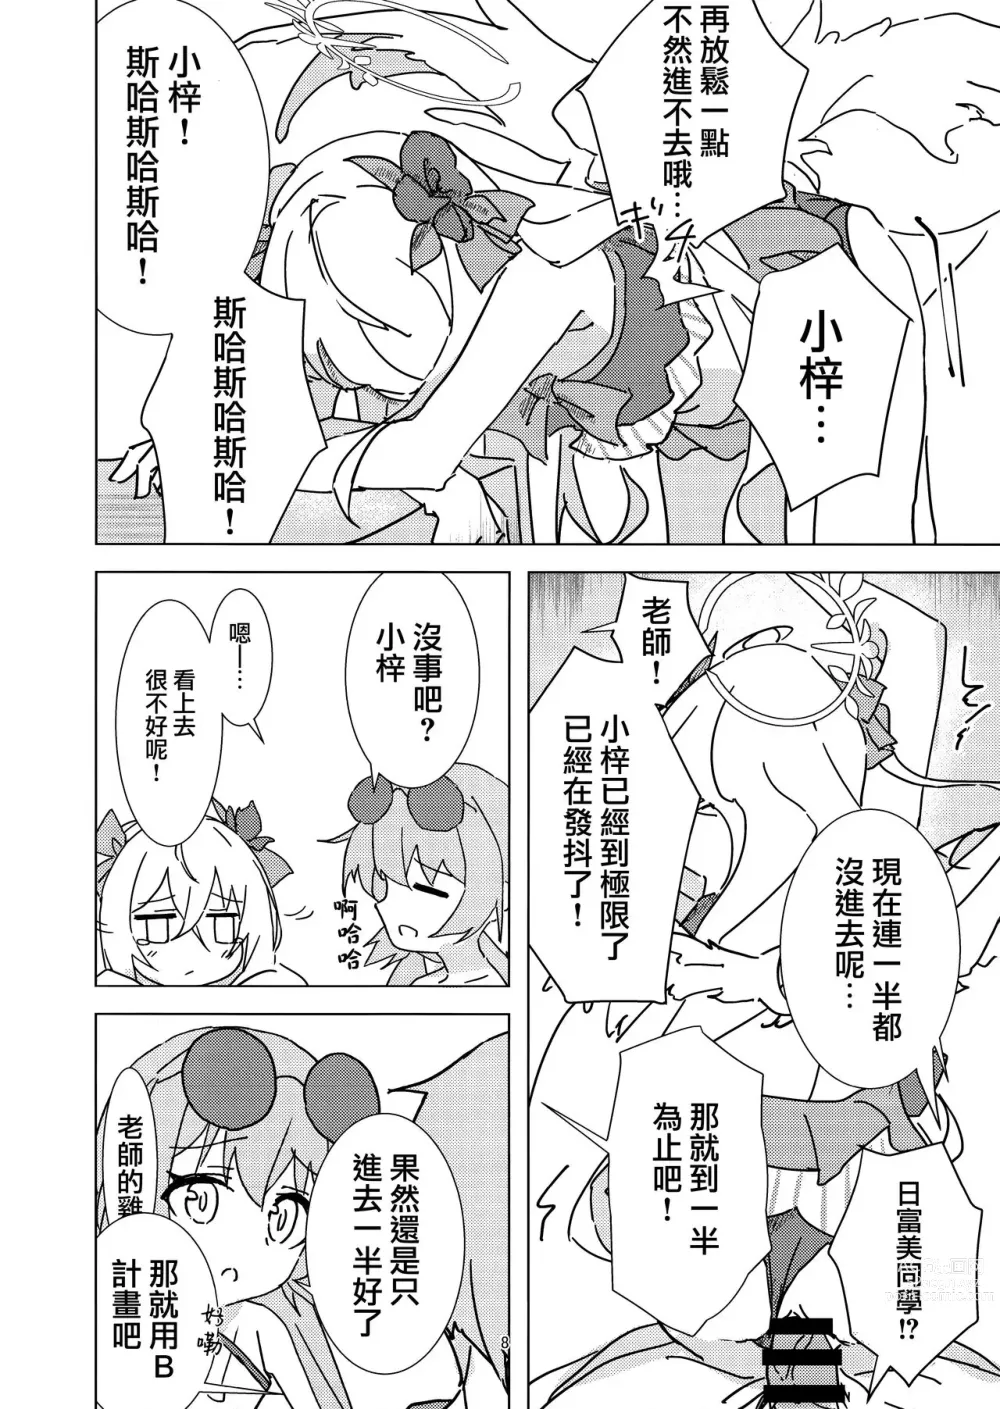 Page 7 of doujinshi 湛藍夏空